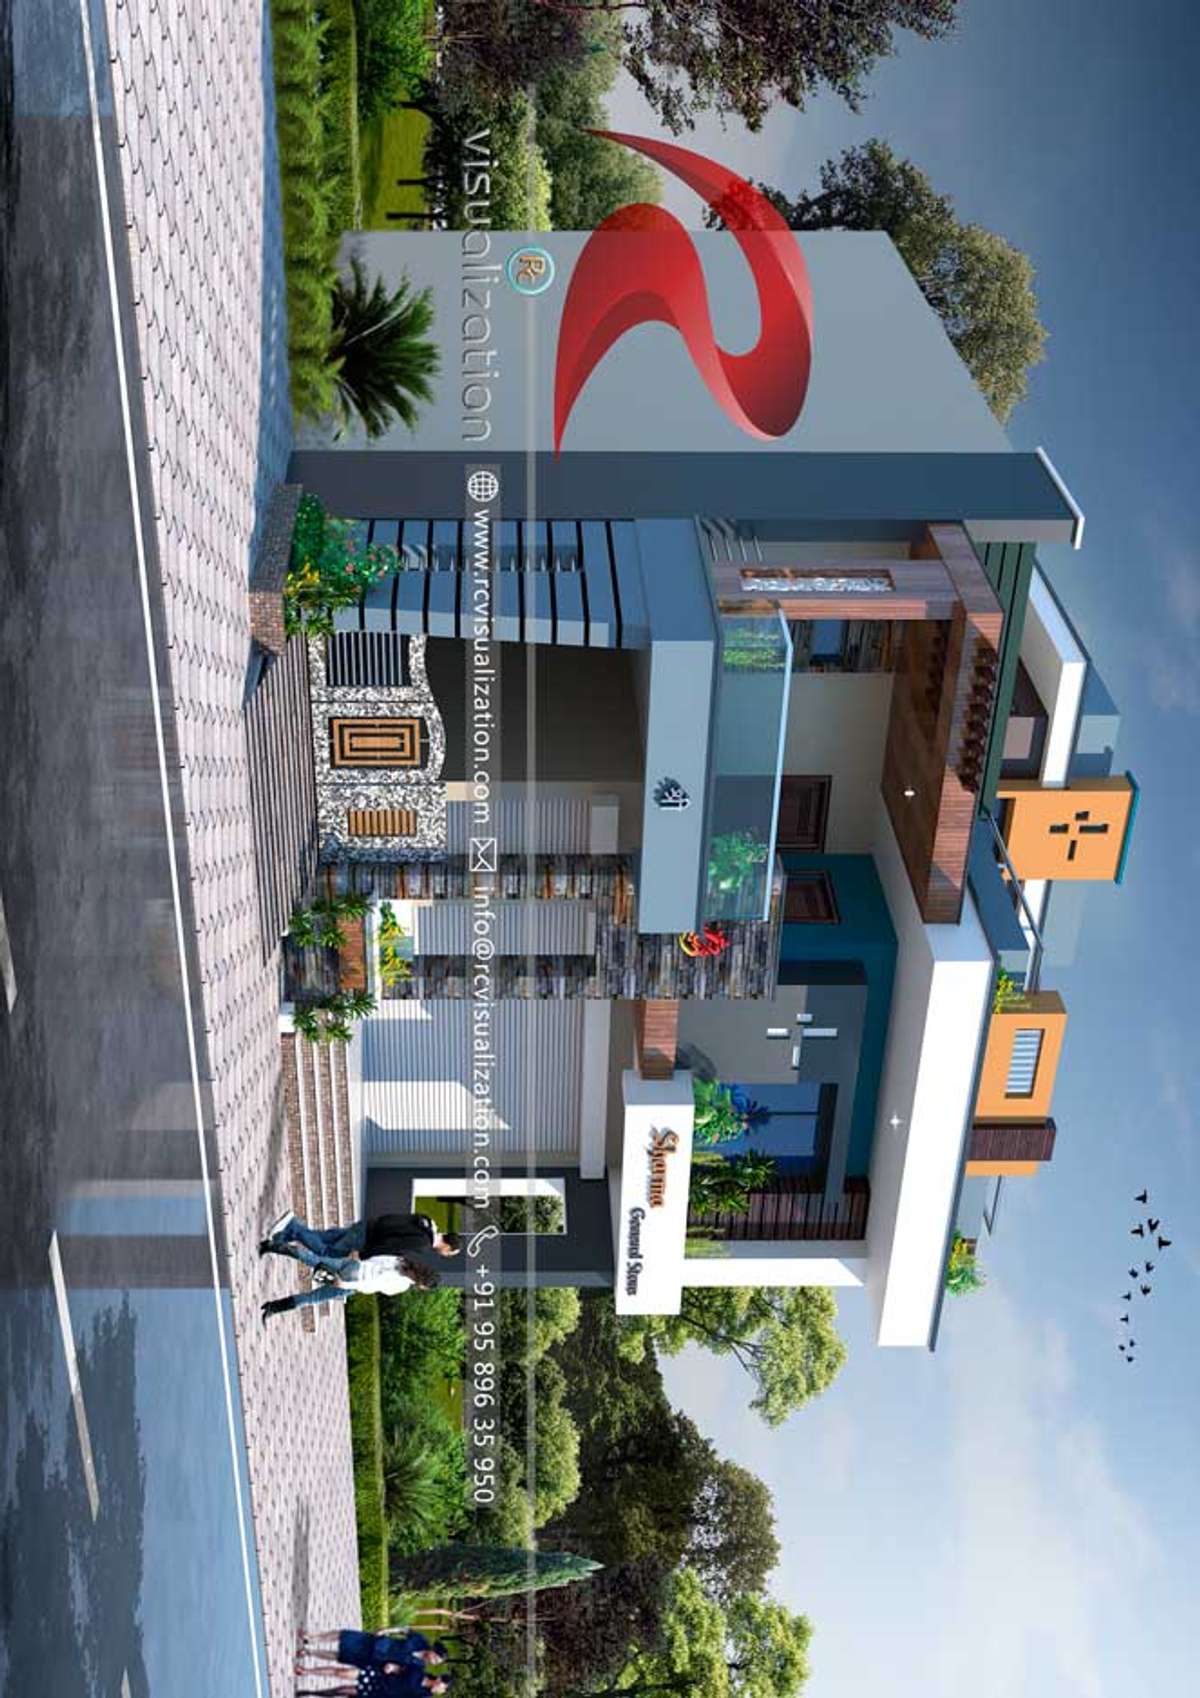 Designs by Architect Er Raghu choyal, Indore | Kolo